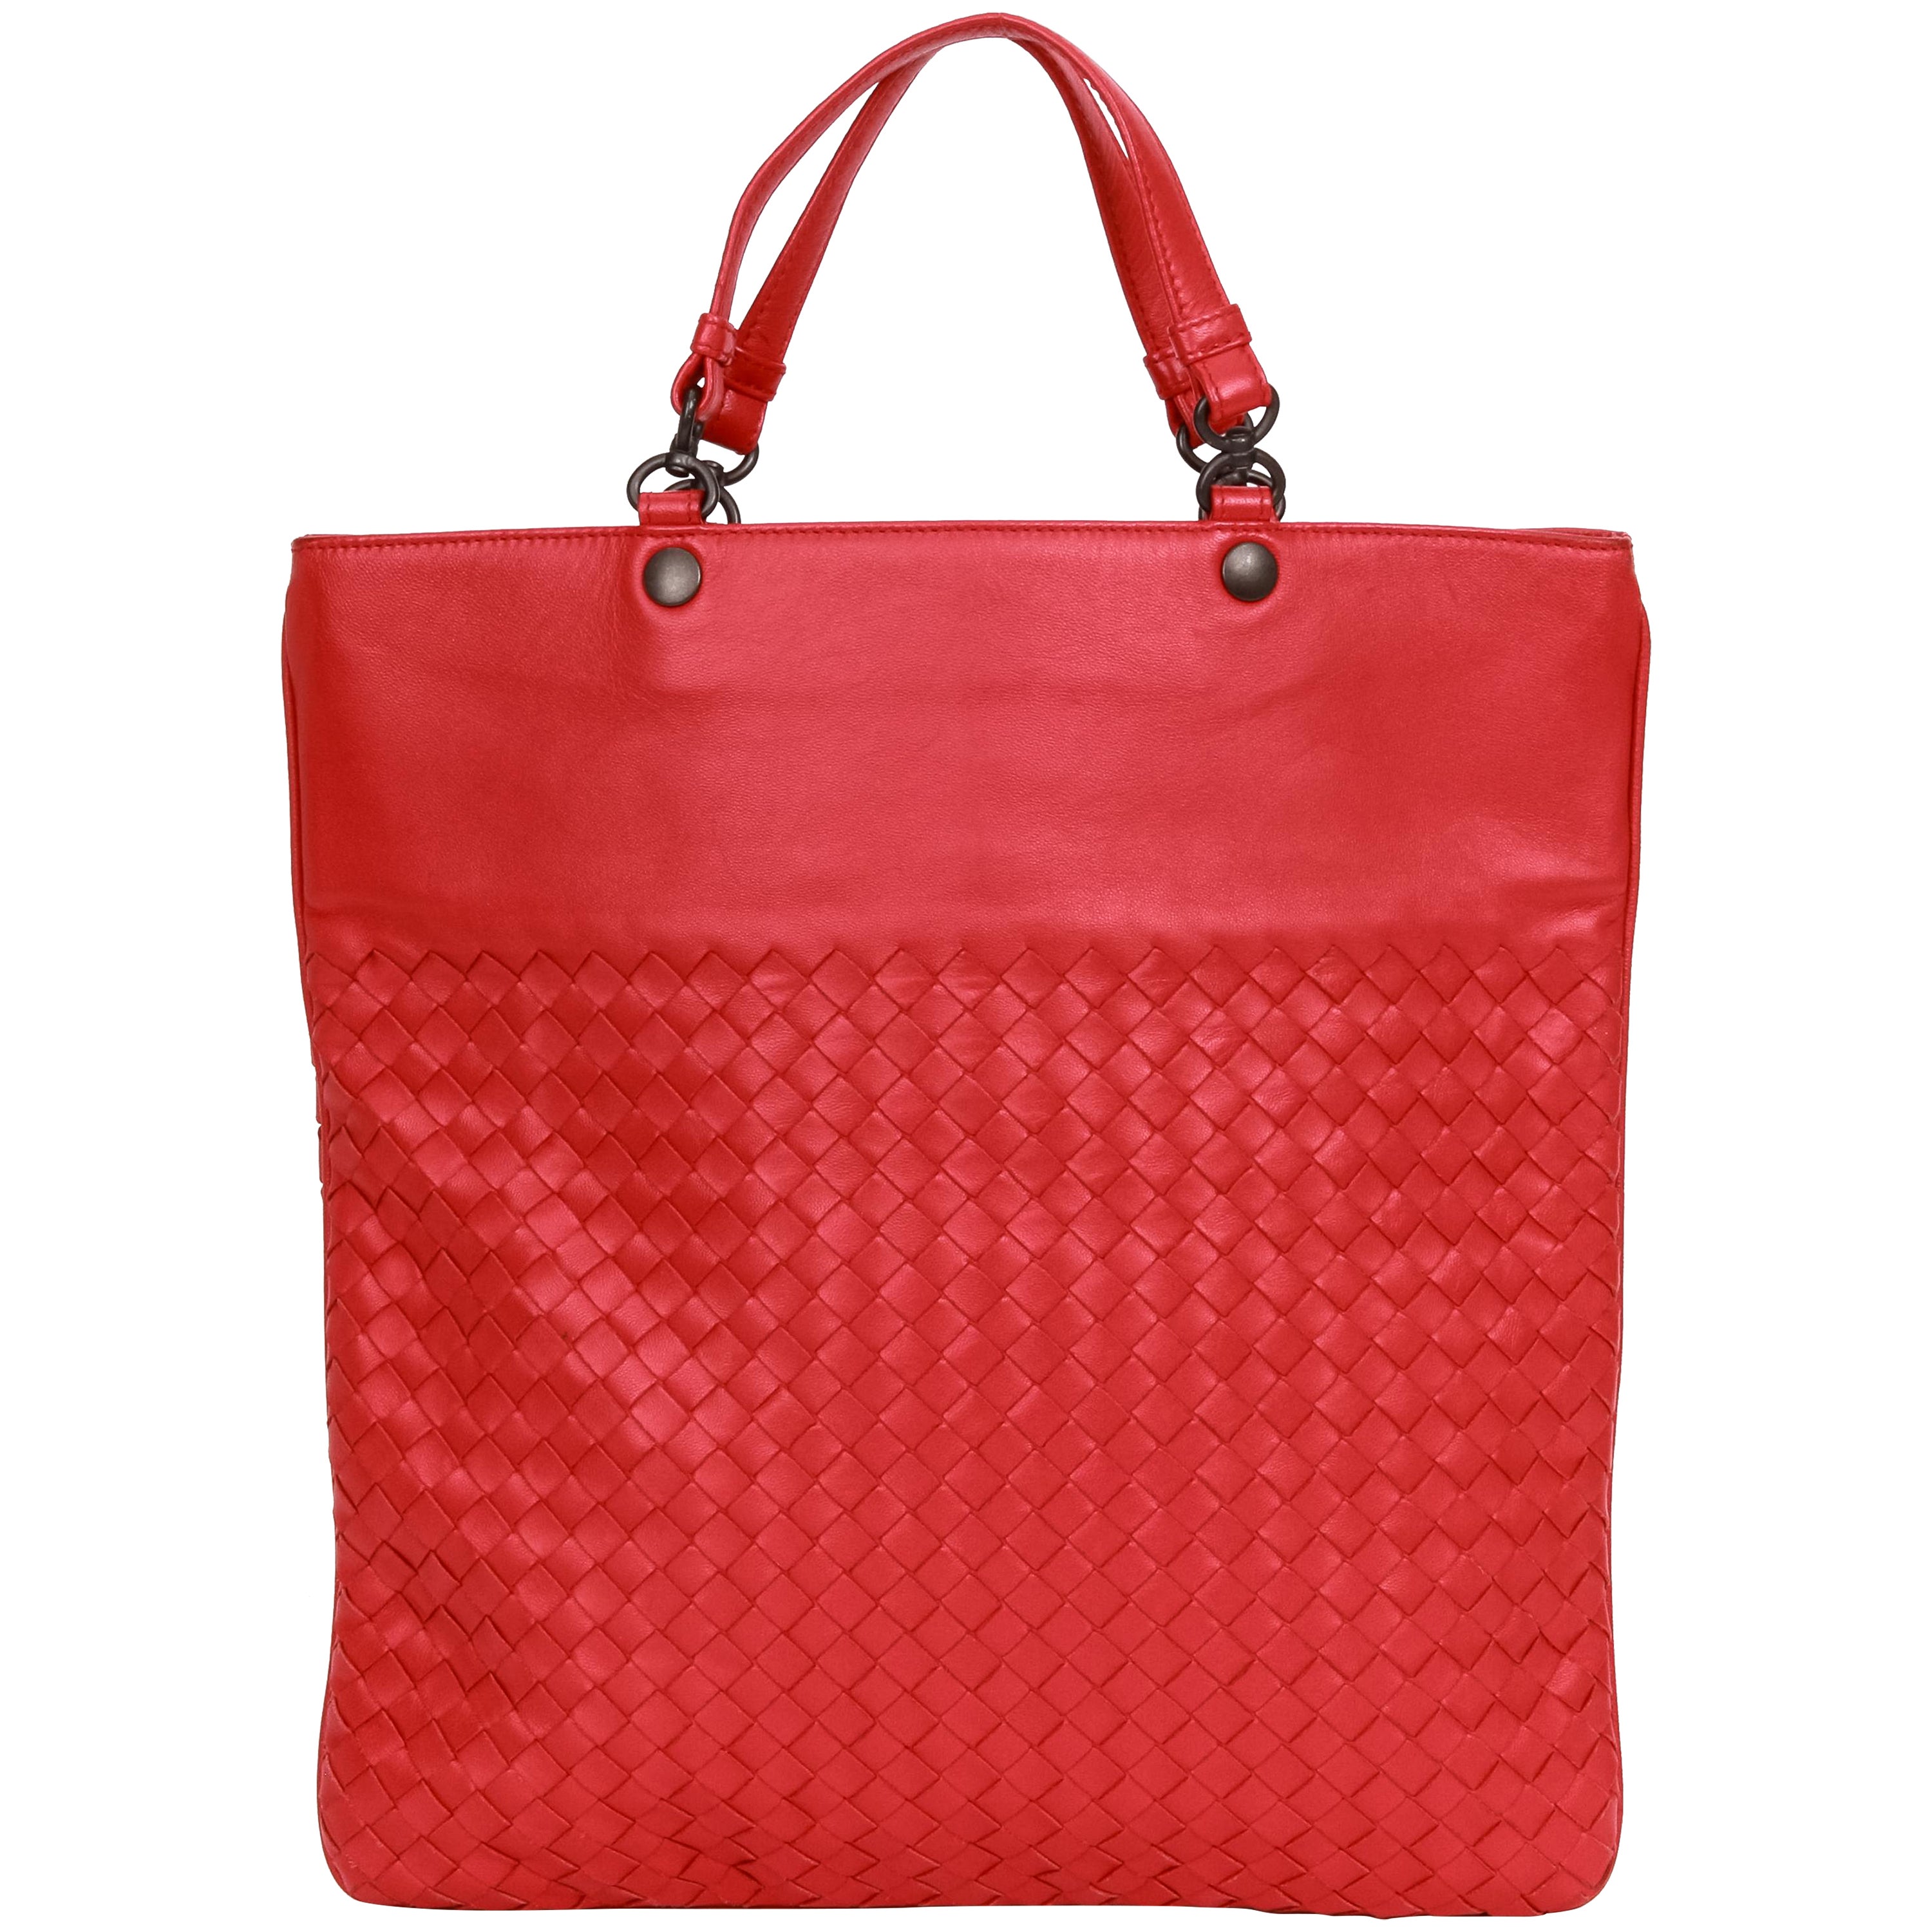 Bottega Veneta Intrecciato Red Lambskin Woven Leather Bag